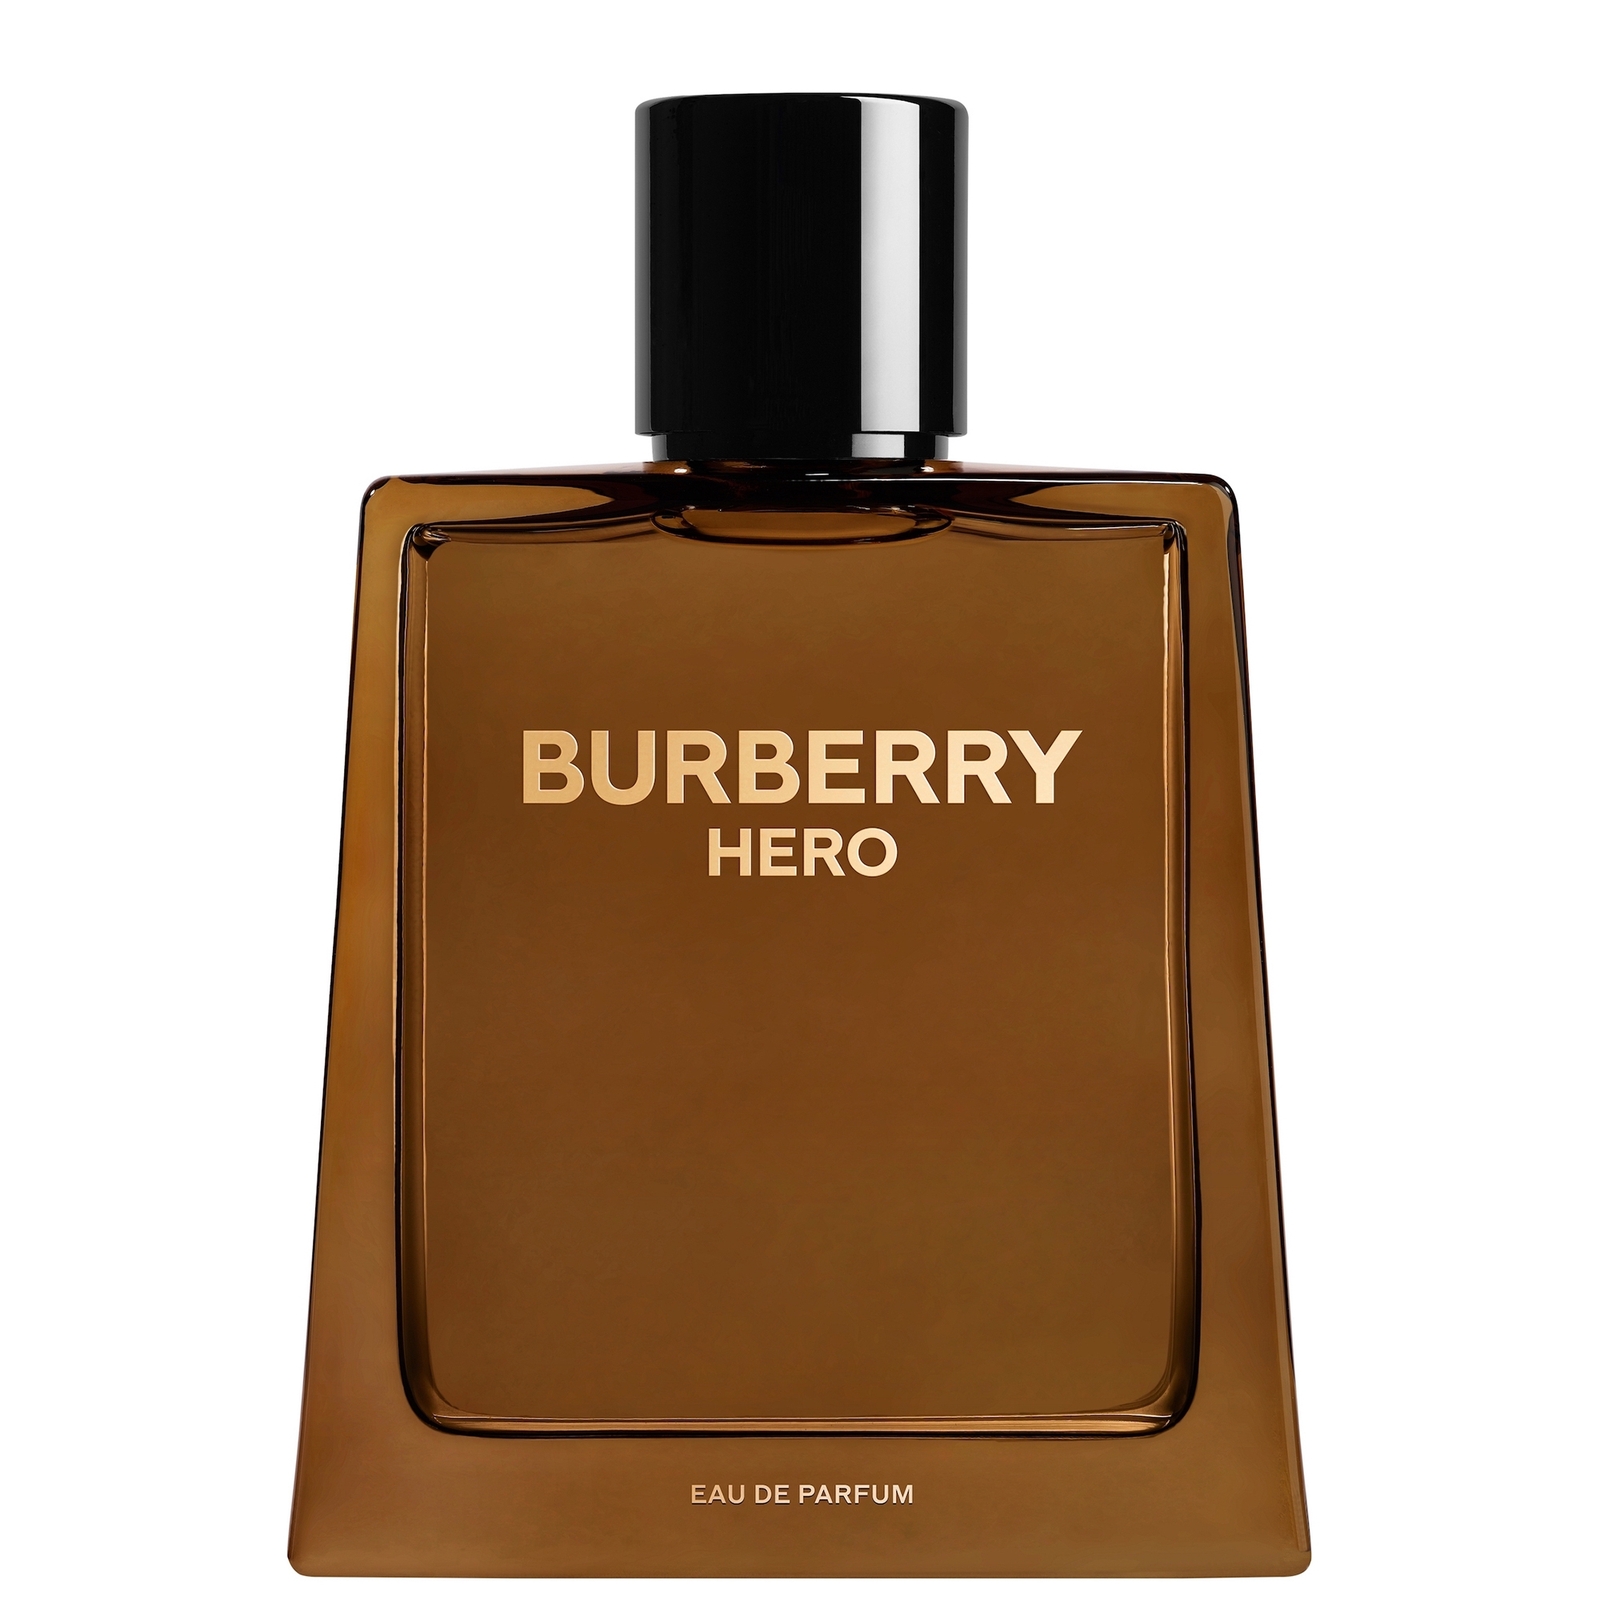 Image of Burberry Hero Eau de Parfum Profumo for Men 150ml